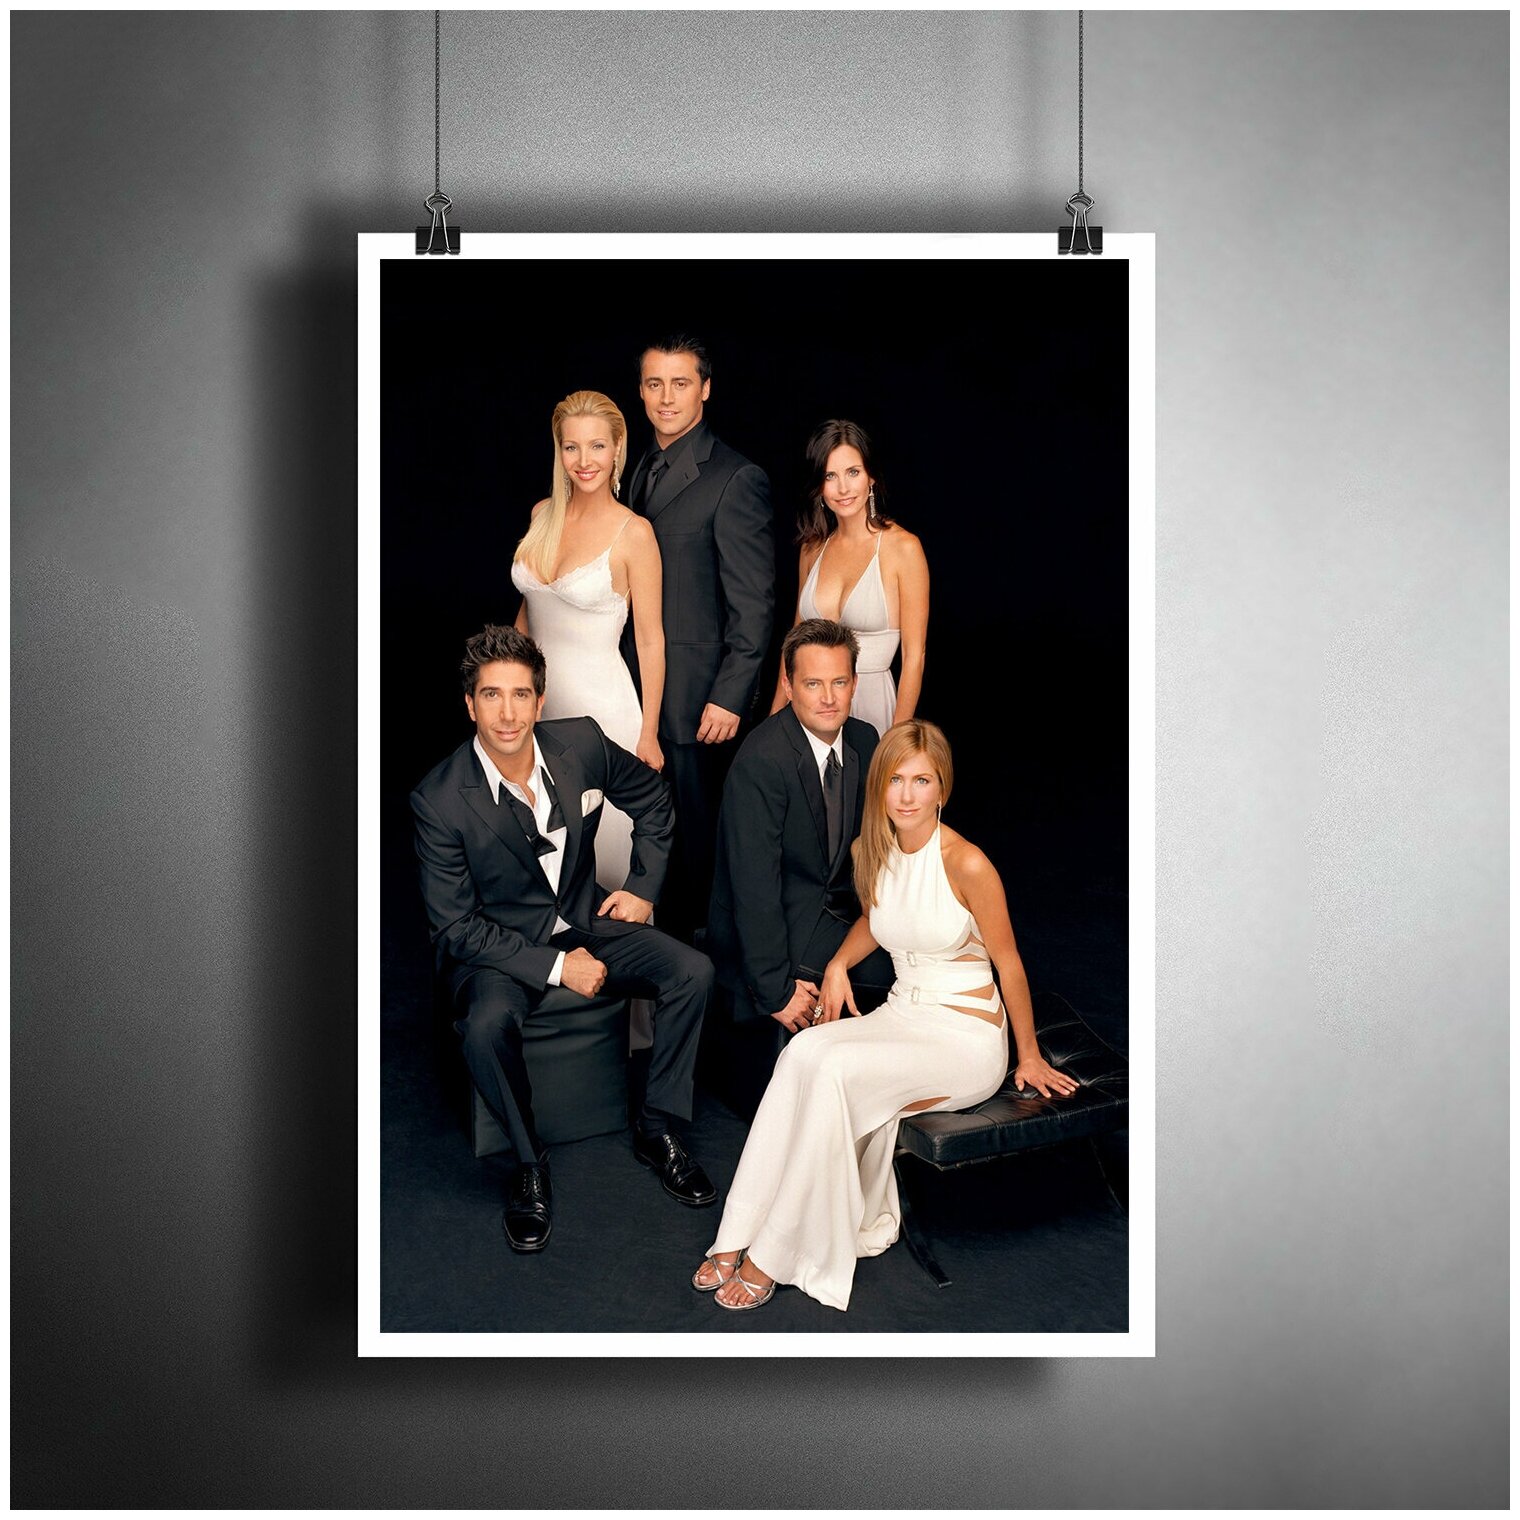 Постер плакат для интерьера "Сериал: Друзья. Friends. Дженнифер Энистон, Мэтт ЛеБлан и др." / Декор дома, офиса, комнаты, квартиры A3 (297 x 420 мм)